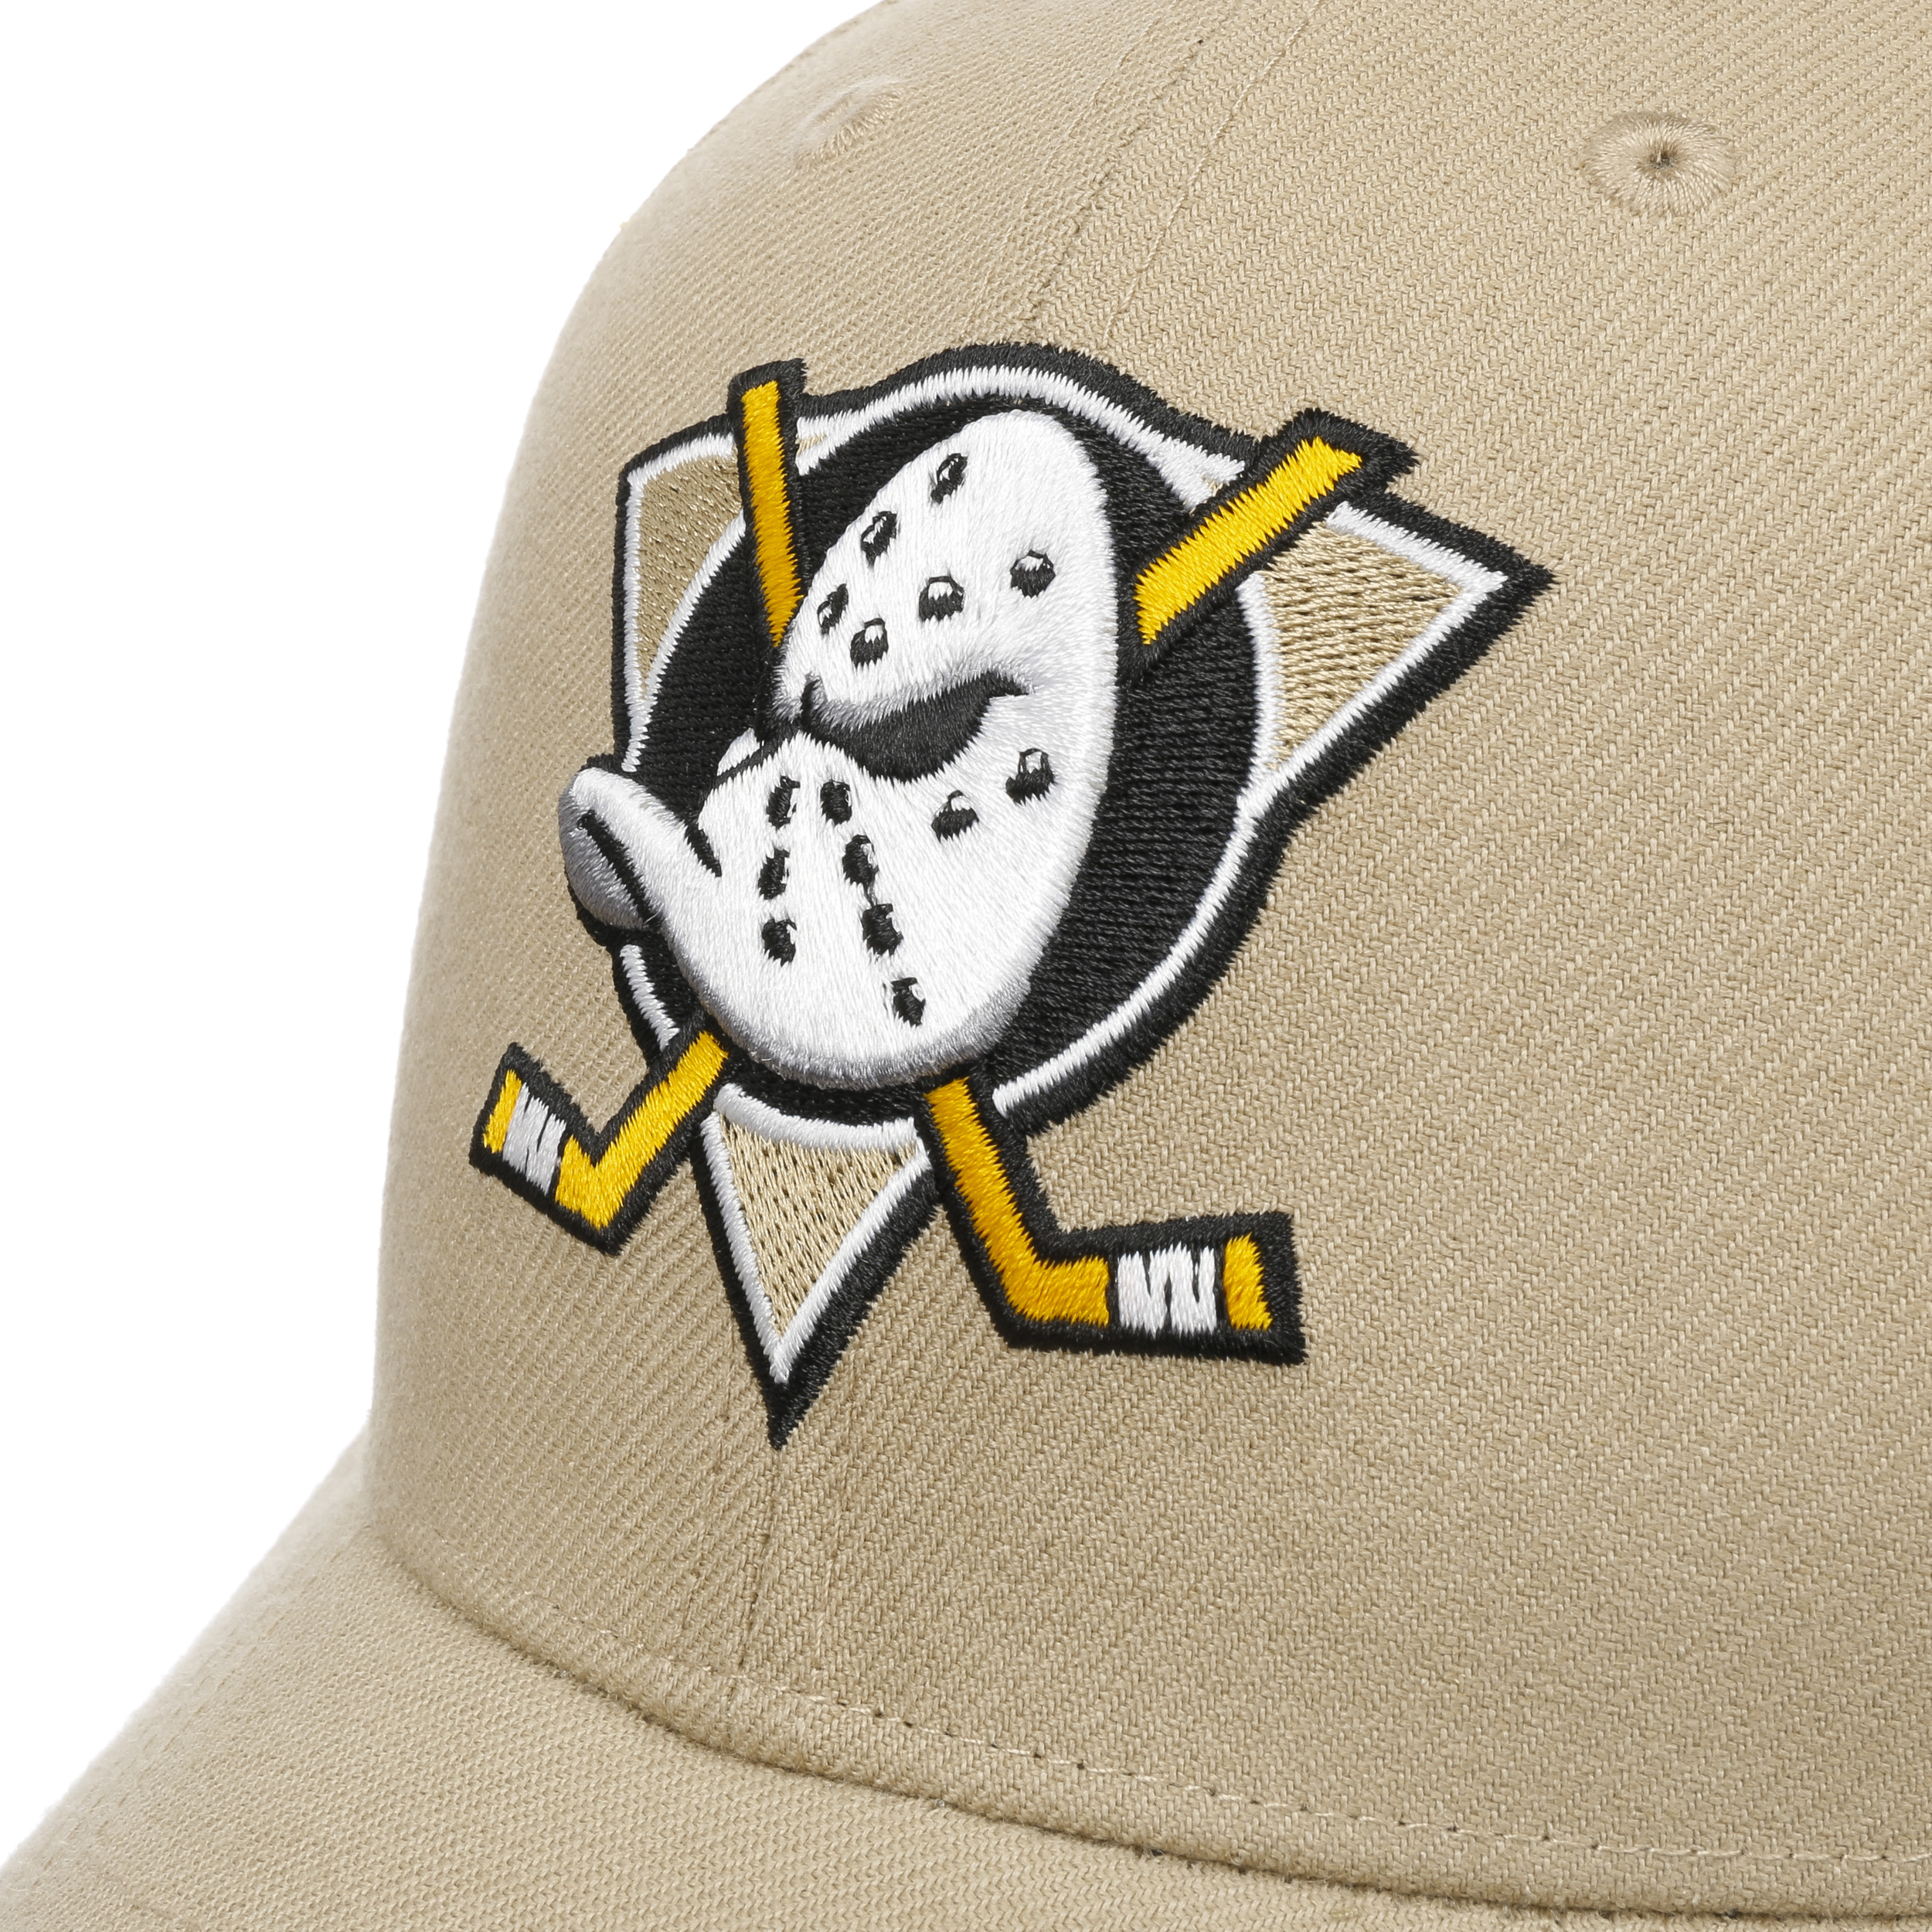 47Brand Anaheim Ducks Sandalwood Ballpark Camo Captain MVP Snapback Hat, 47 BRAND HATS, CAPS